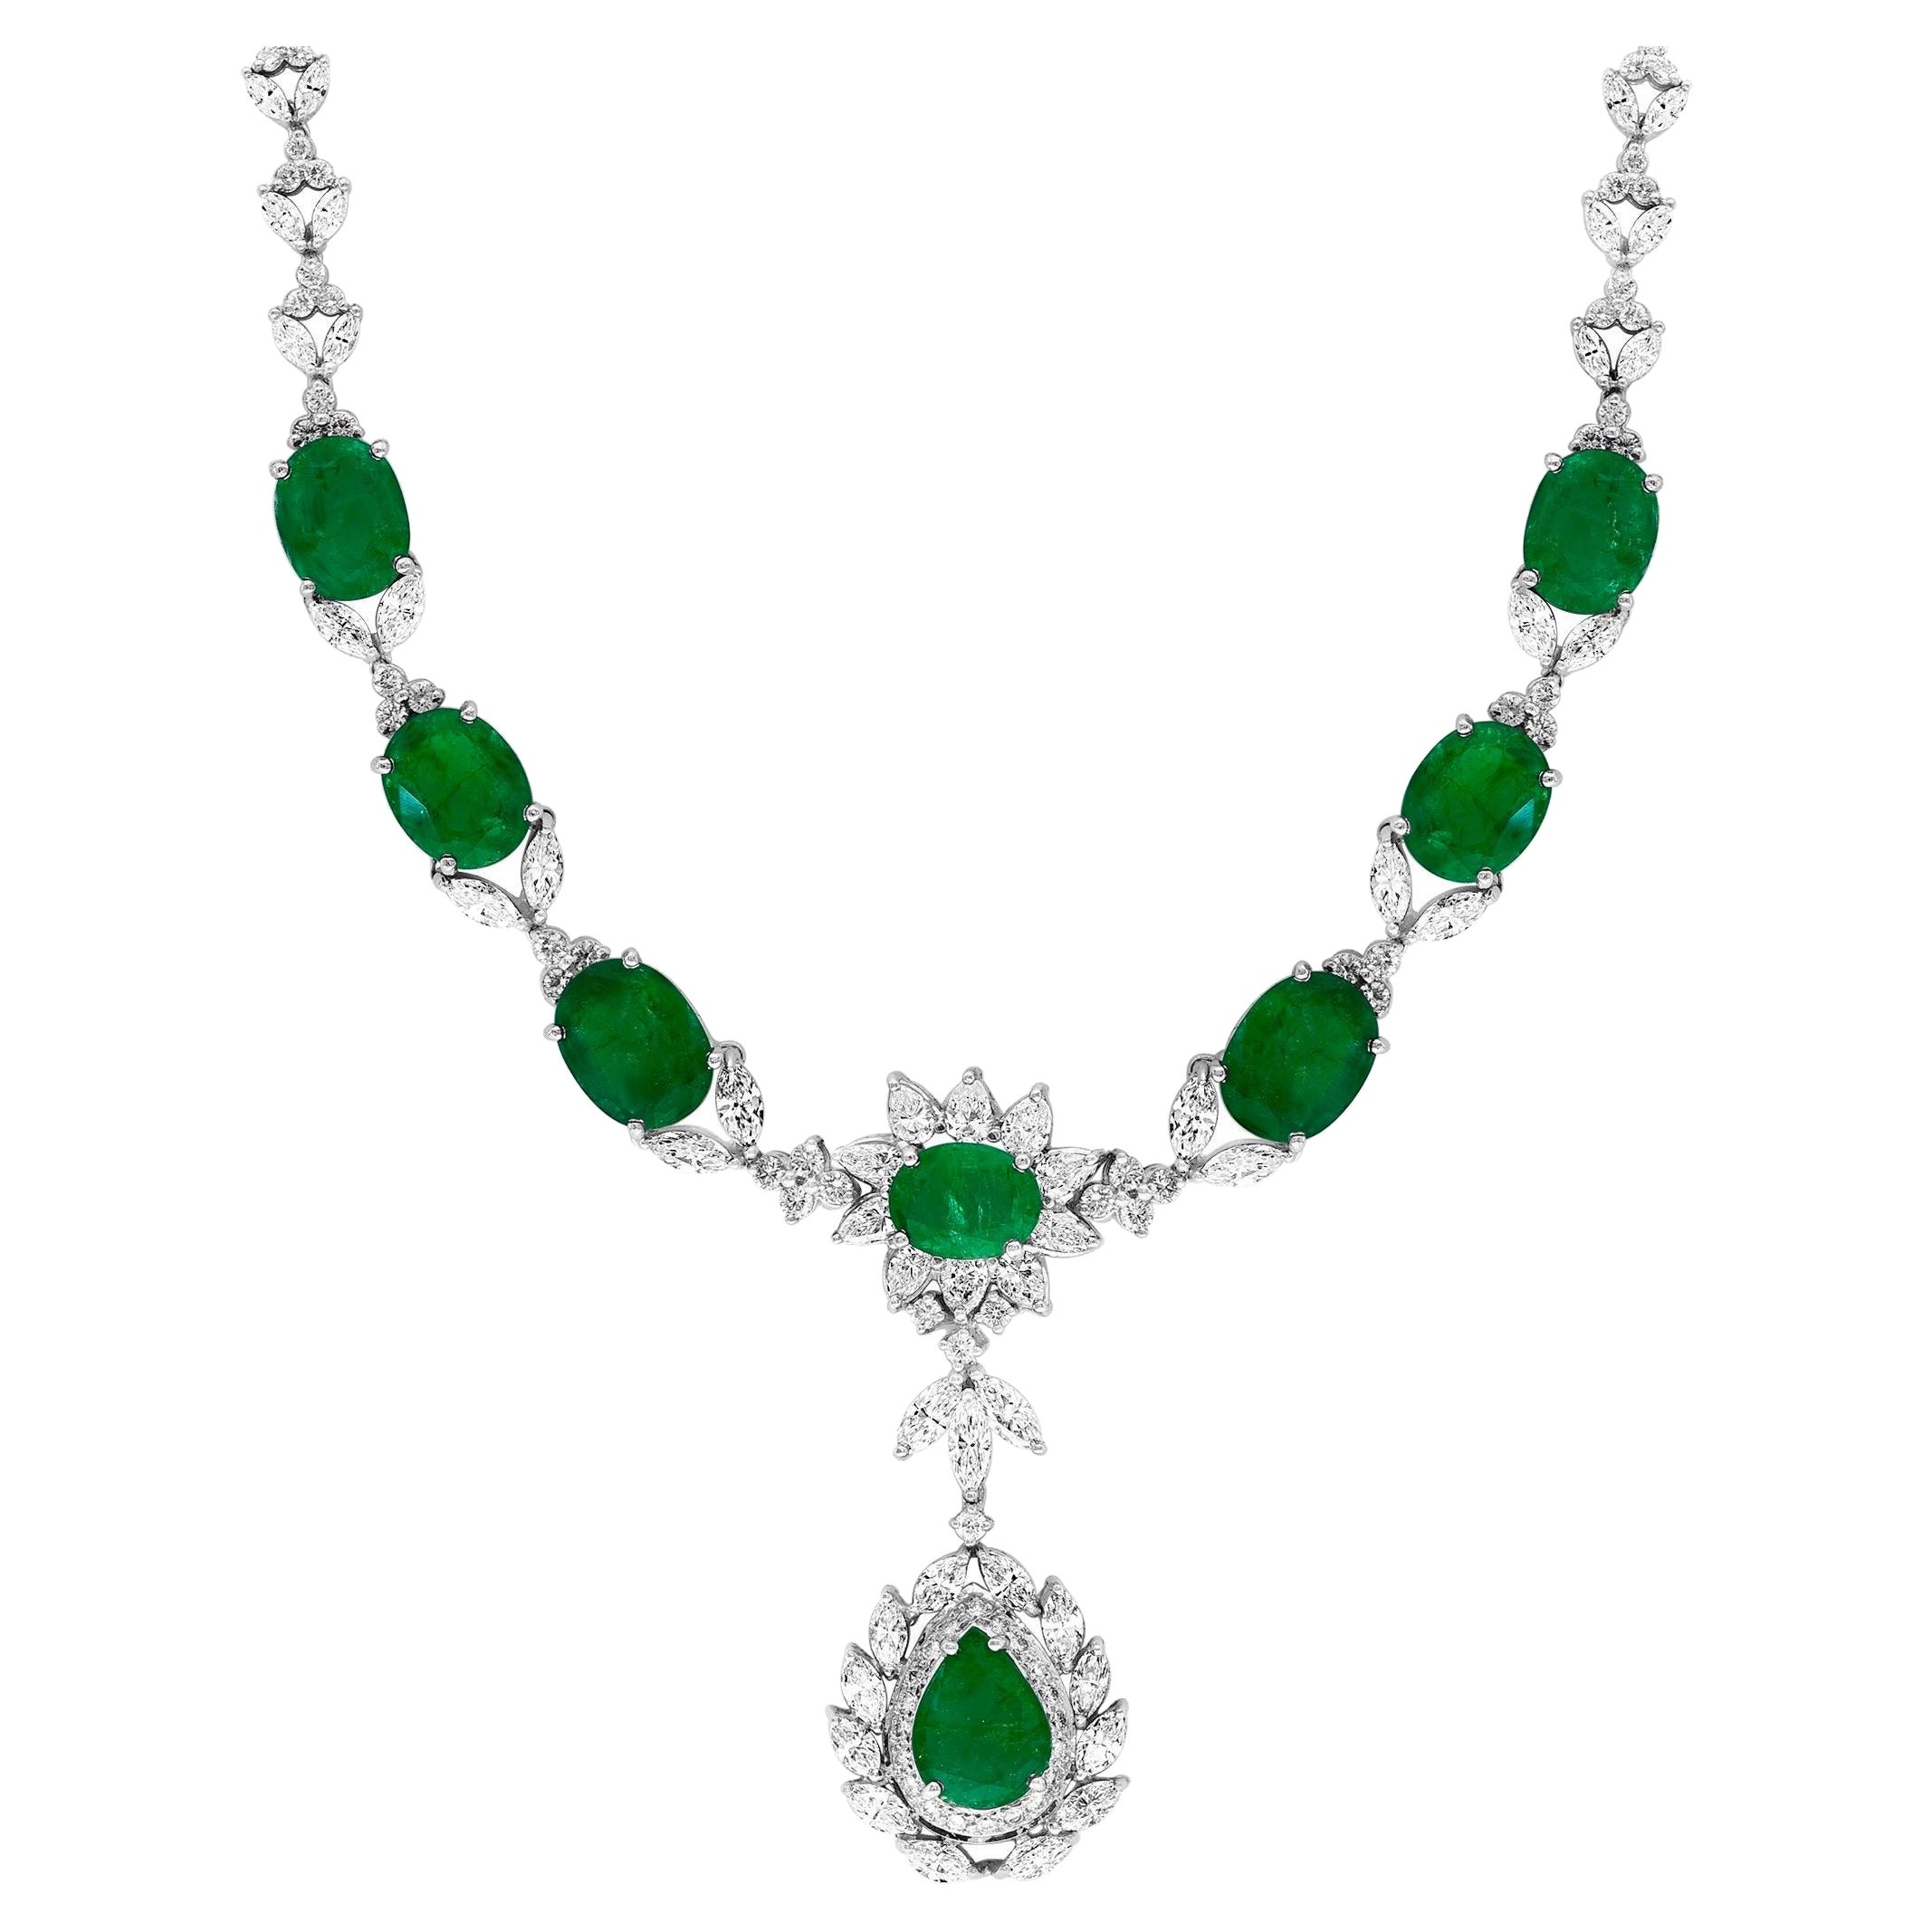 GIA Certified 56 Ct Zambian Emerald & 38 Ct Diamond Fringe Necklace 18KWG Bridal